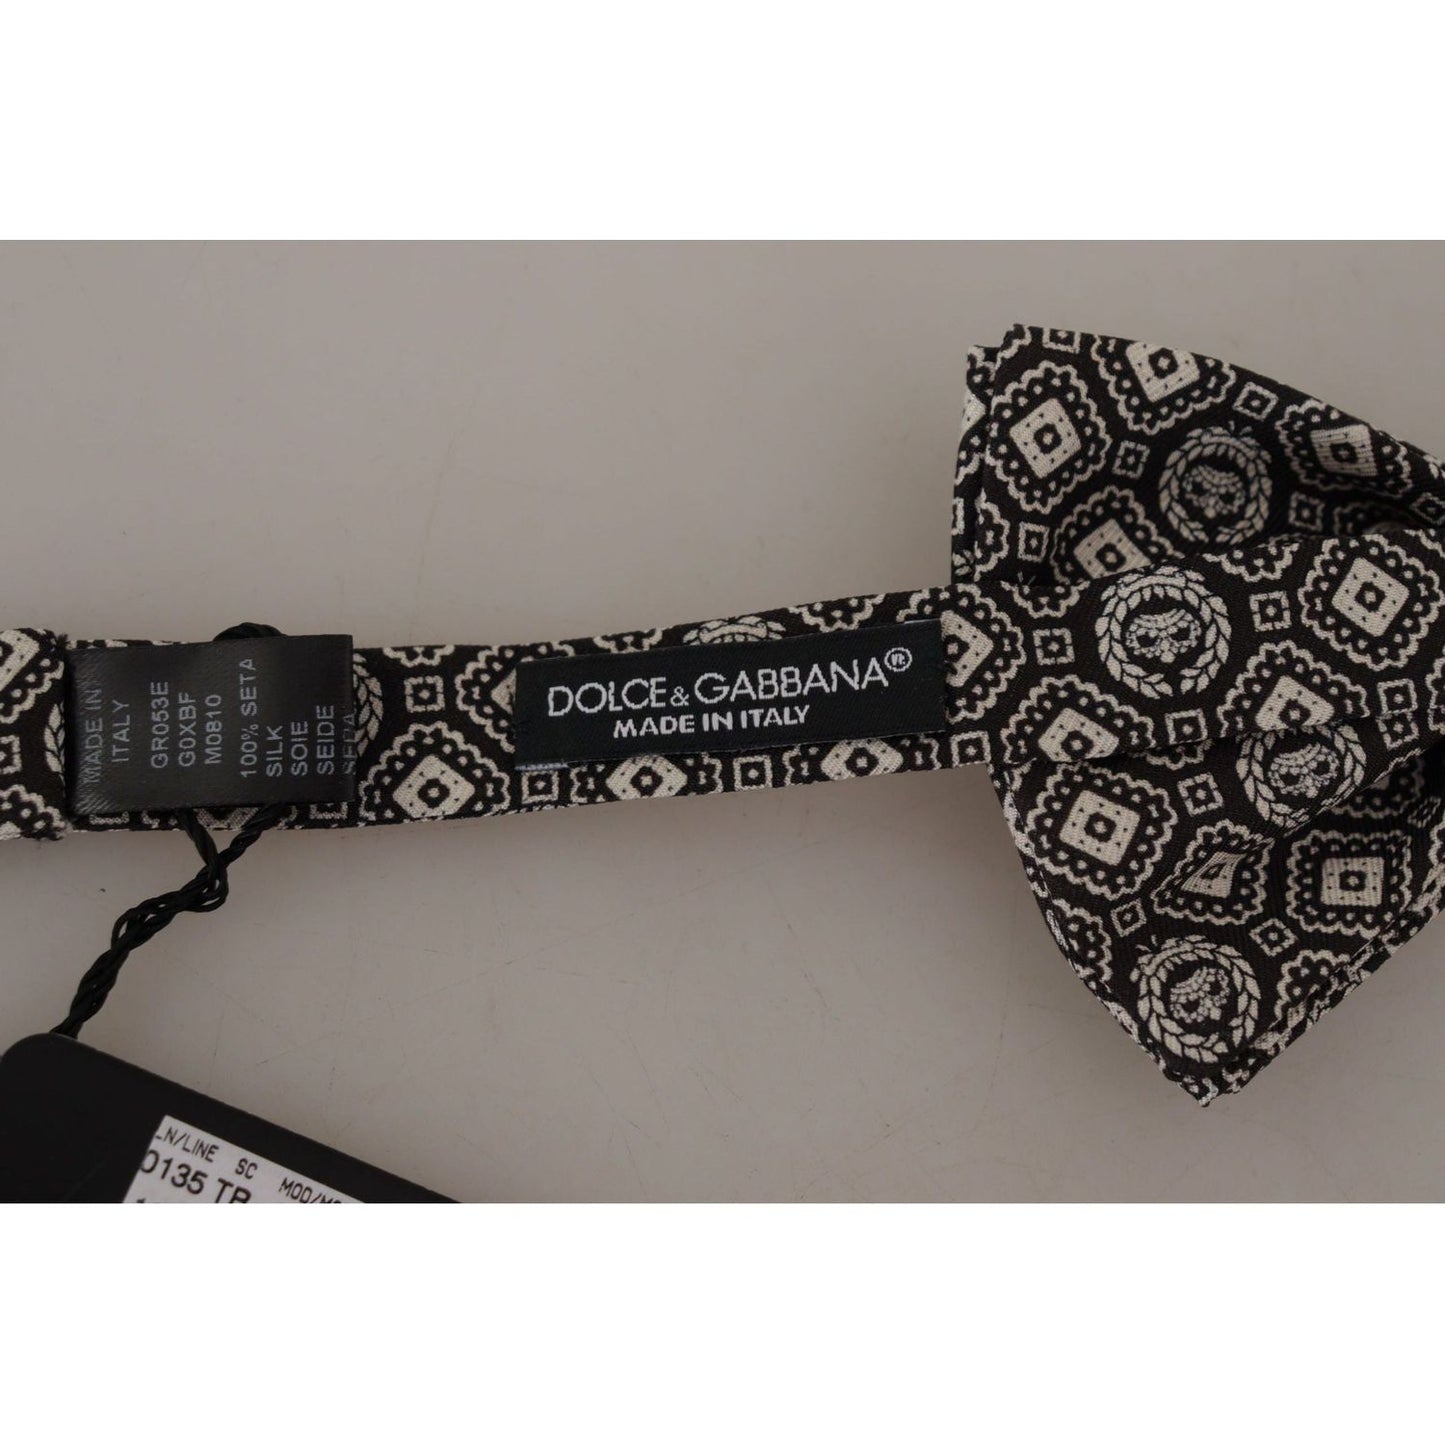 Dolce & Gabbana Elegant Black Silk Bow Tie black-fantasy-pattern-adjustable-neck-papillon-bow-tie-5